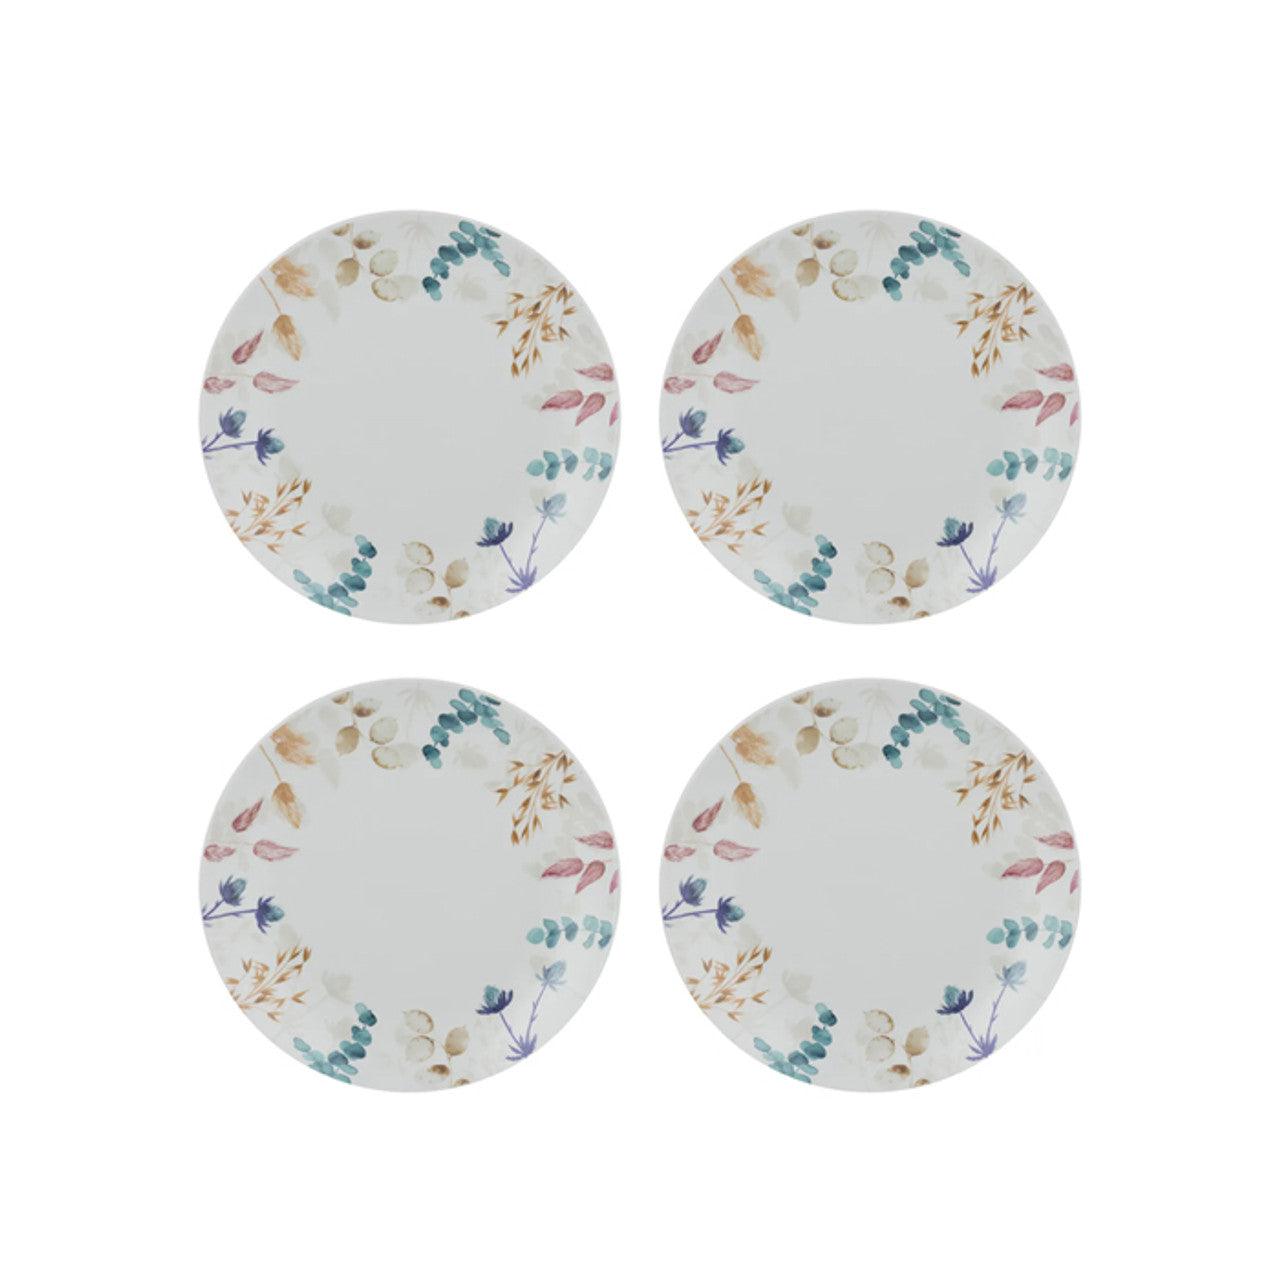 Price & Kensington Meadow Cake Plates | Set of 4 - Choice Stores